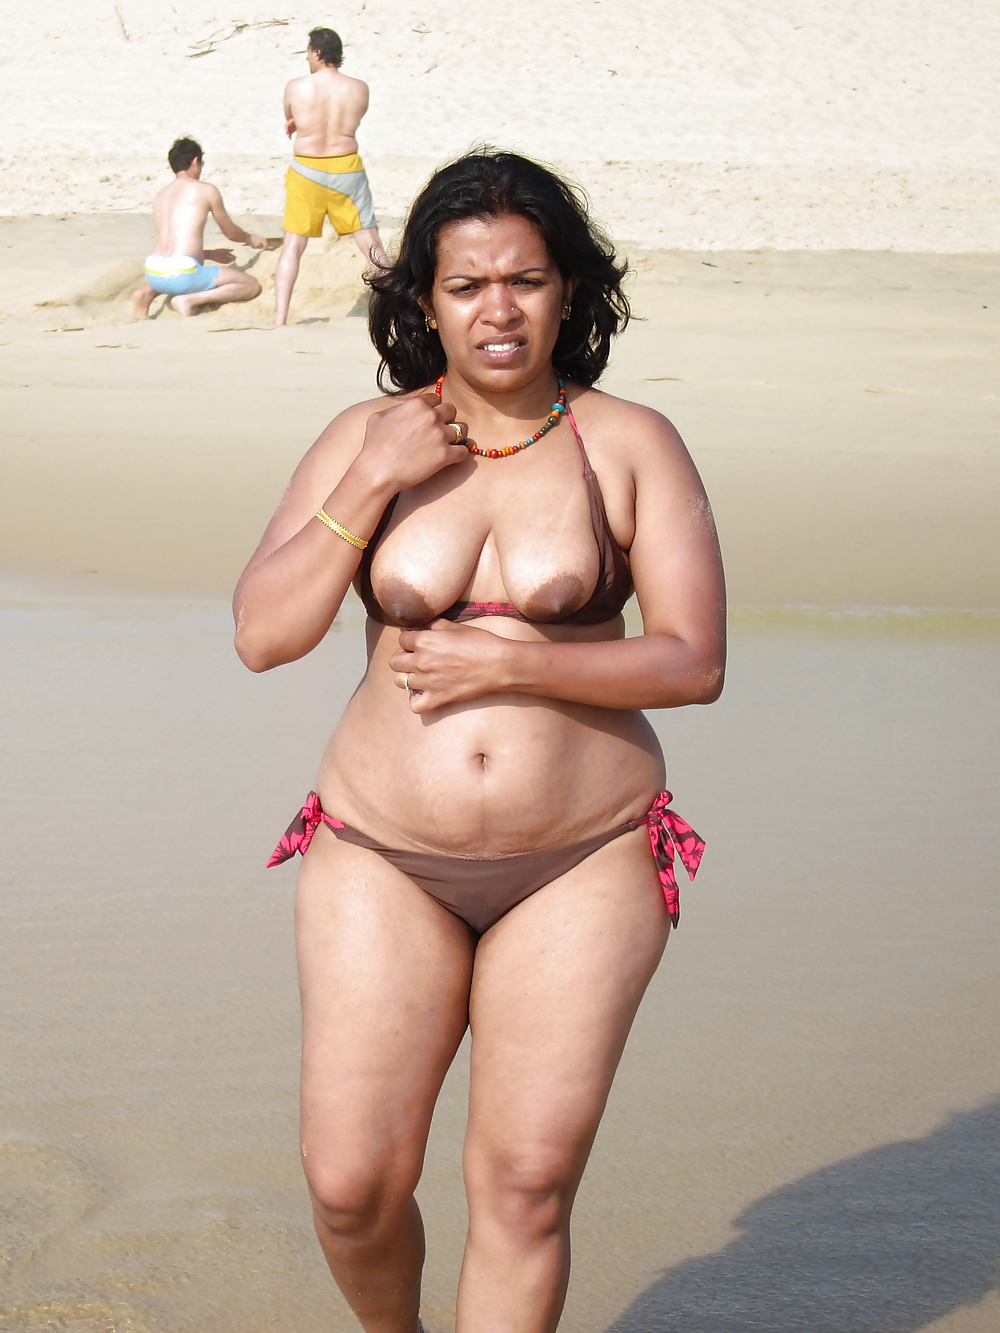 Indian Big Boob Bhabhi Sex Naked On Beach - Indian Girls Club